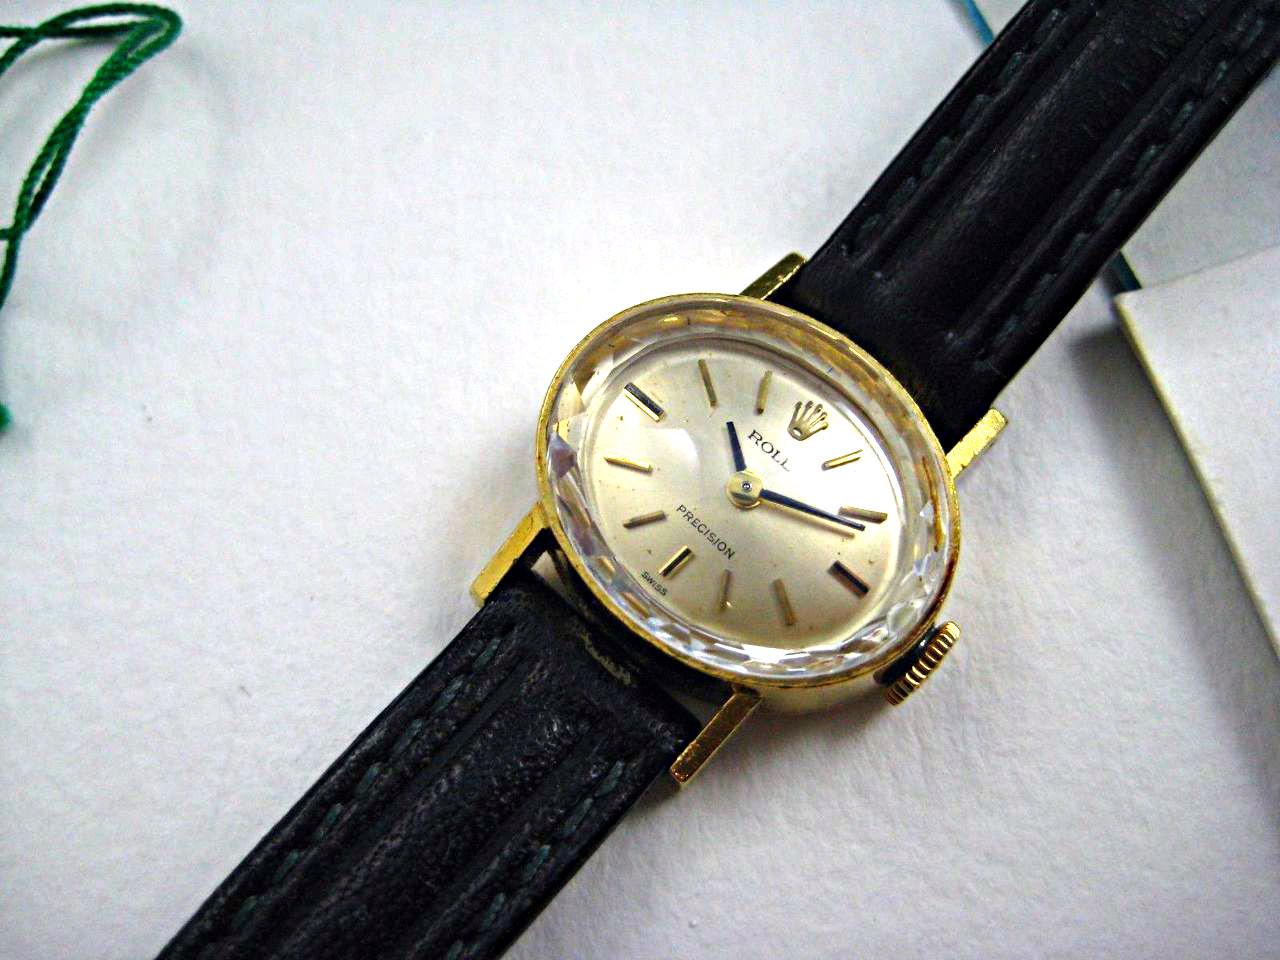 Rolex 2636 18k wristwatch box, papers & tags & receipt 1970